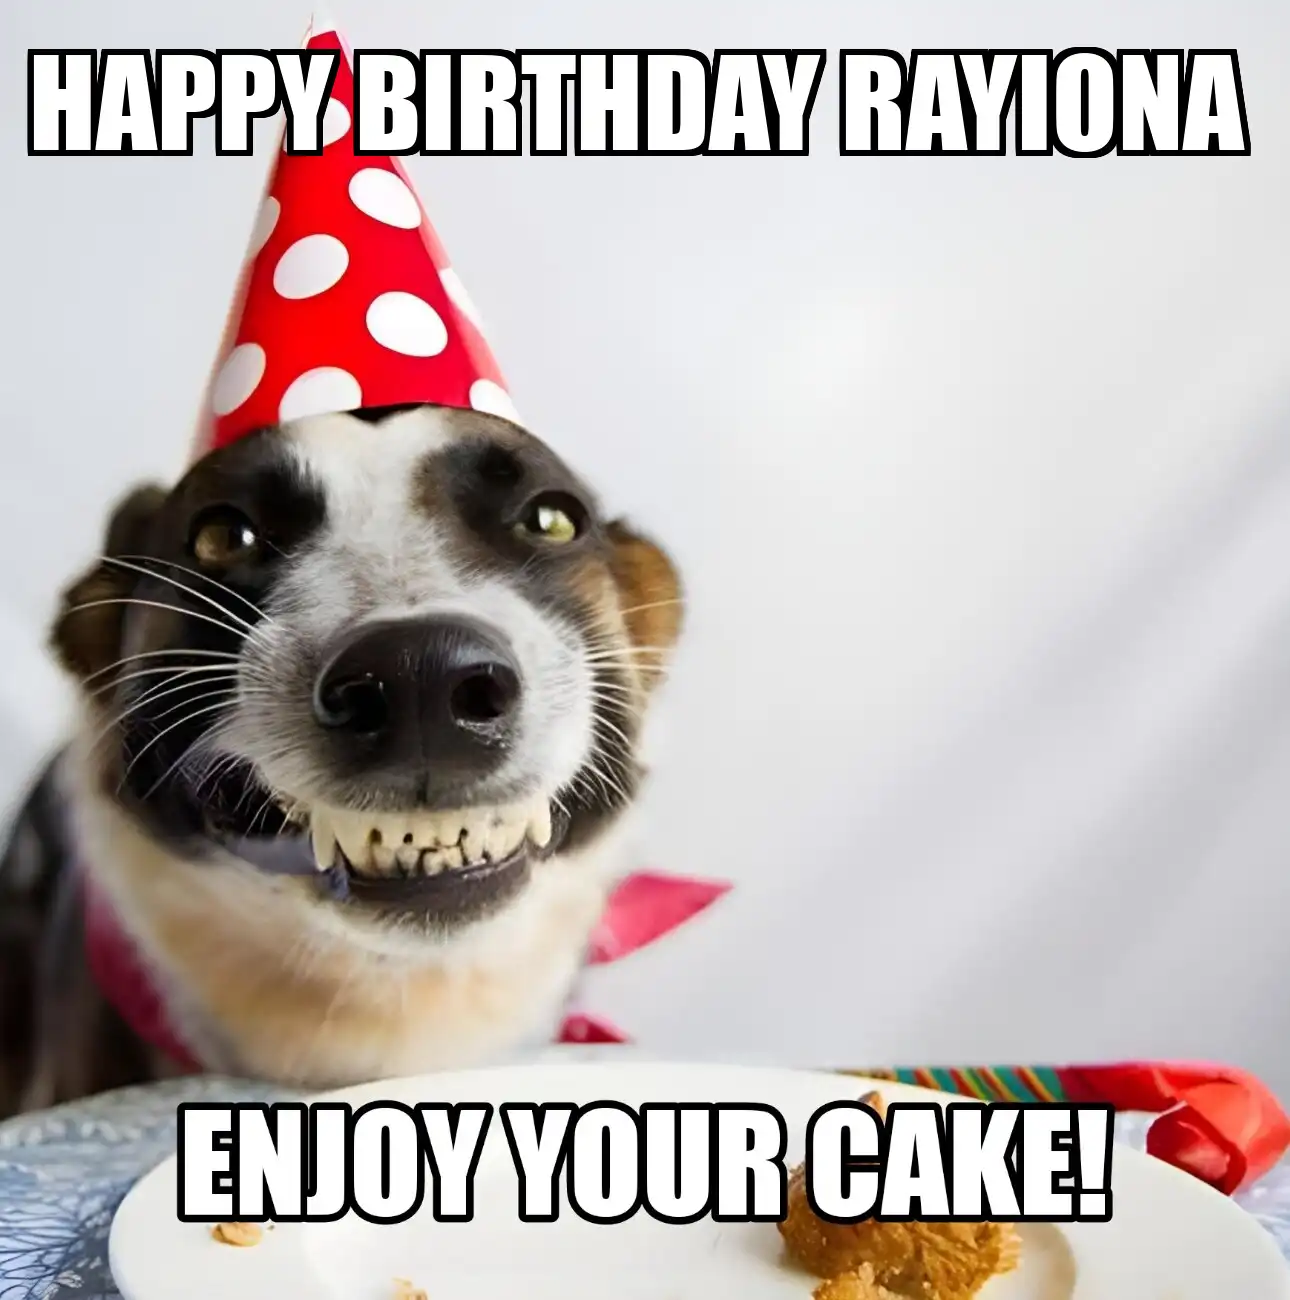 Happy Birthday Rayiona Enjoy Your Cake Dog Meme